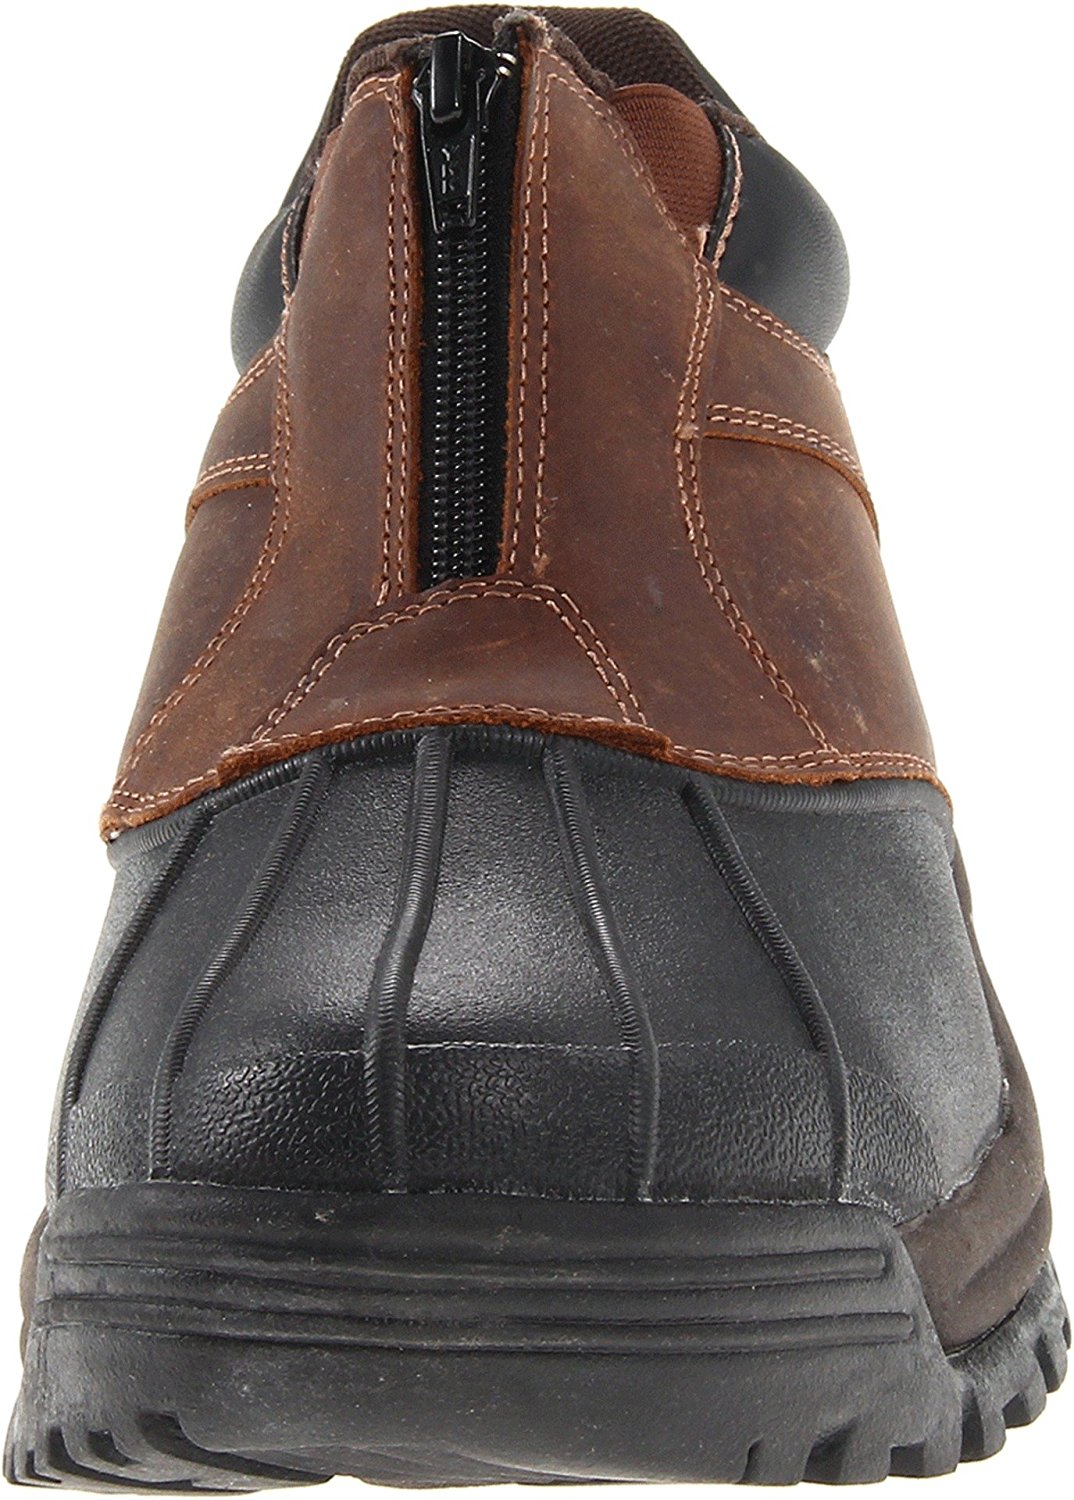 Propet Men's Blizzard Ankle Zip Boot, Brown/Black, Size NFpM | eBay